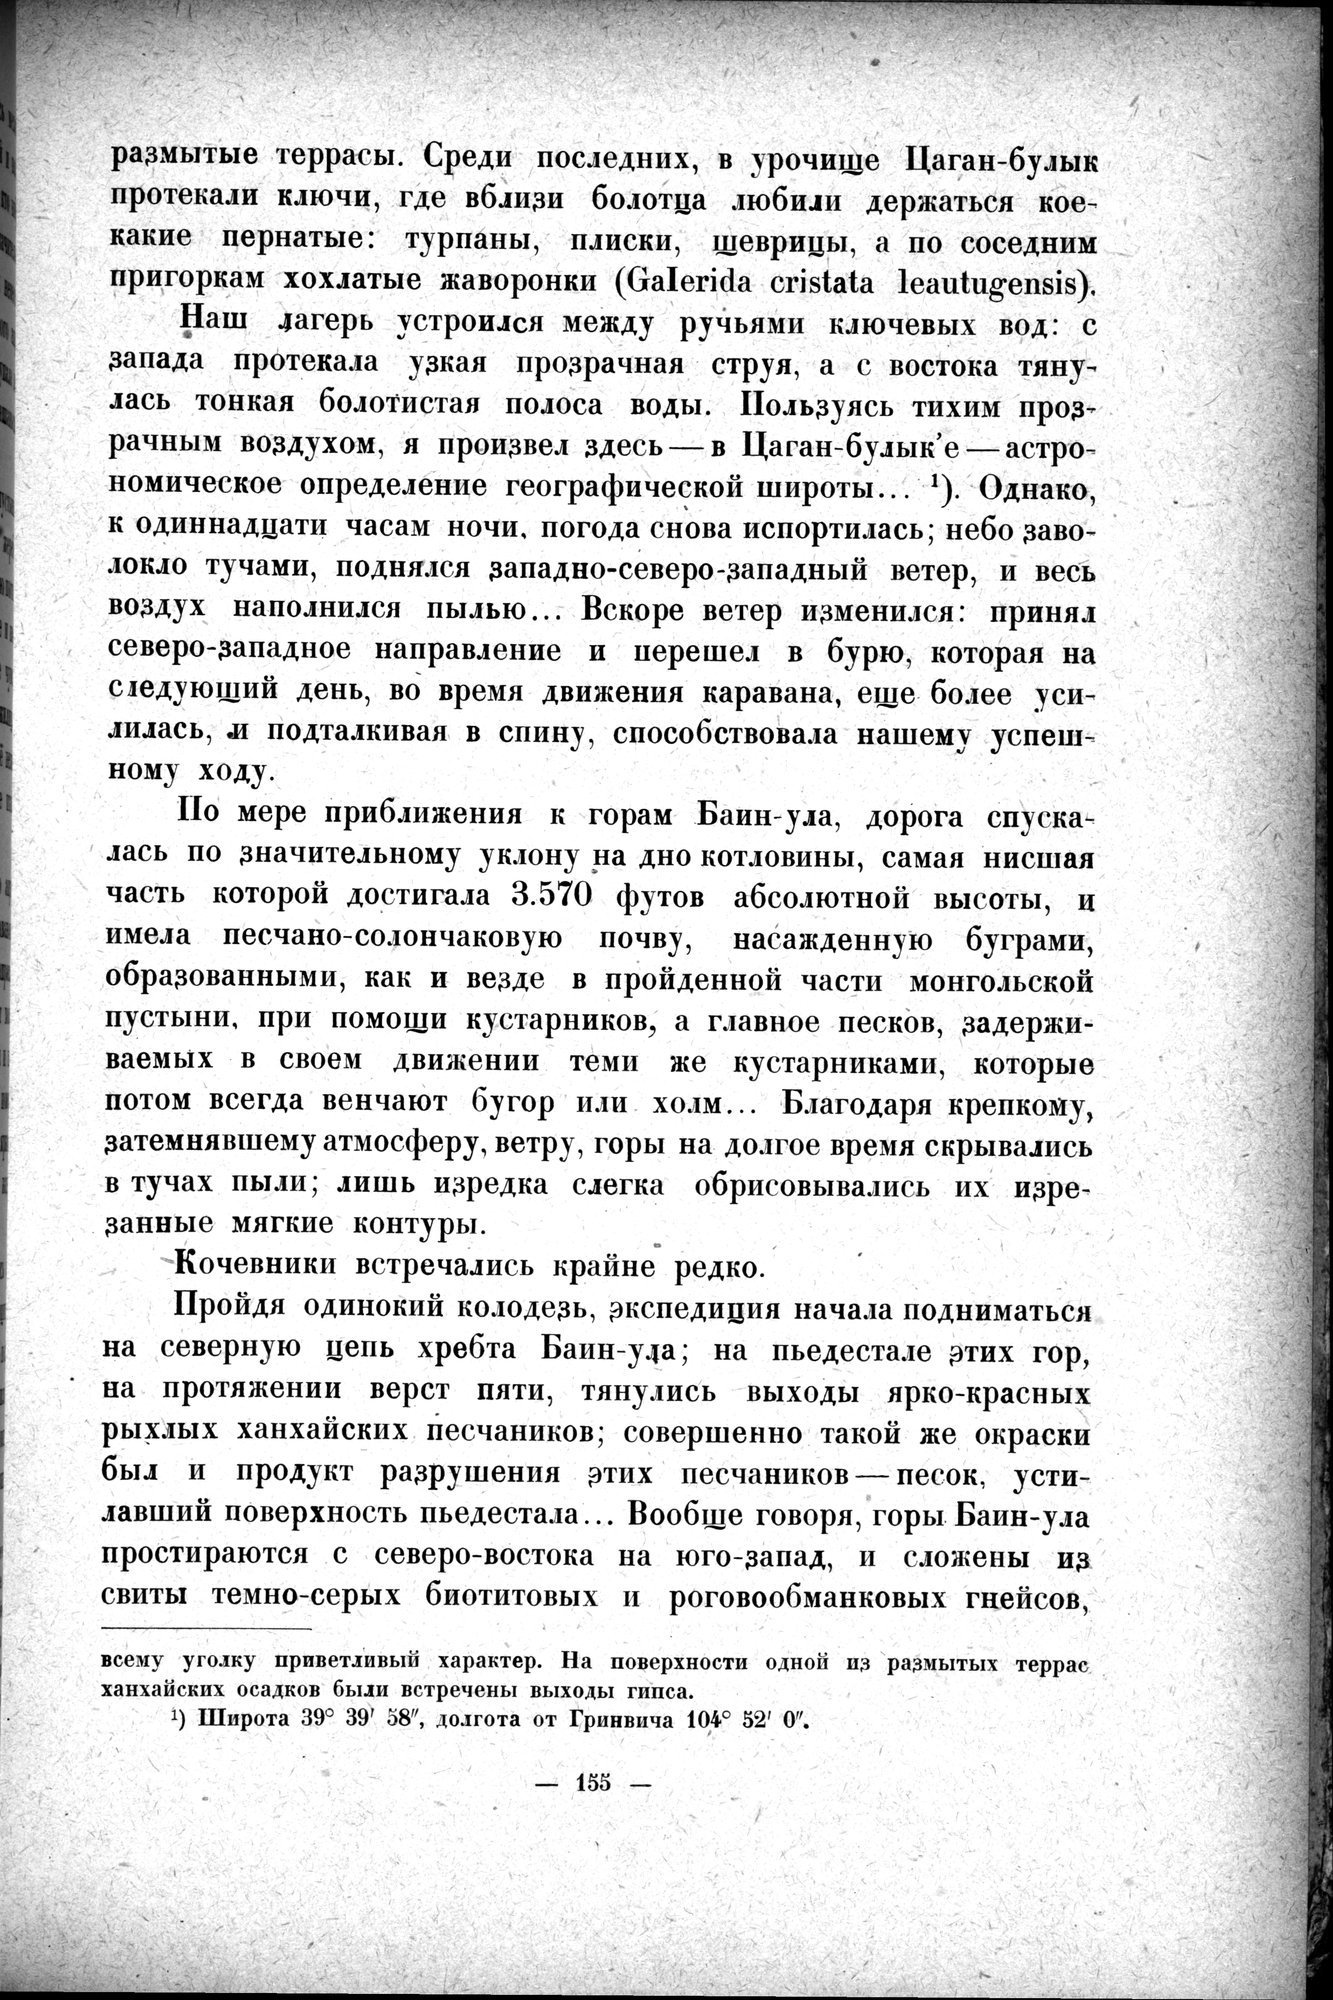 Mongoliya i Amdo i mertby gorod Khara-Khoto : vol.1 / Page 183 (Grayscale High Resolution Image)